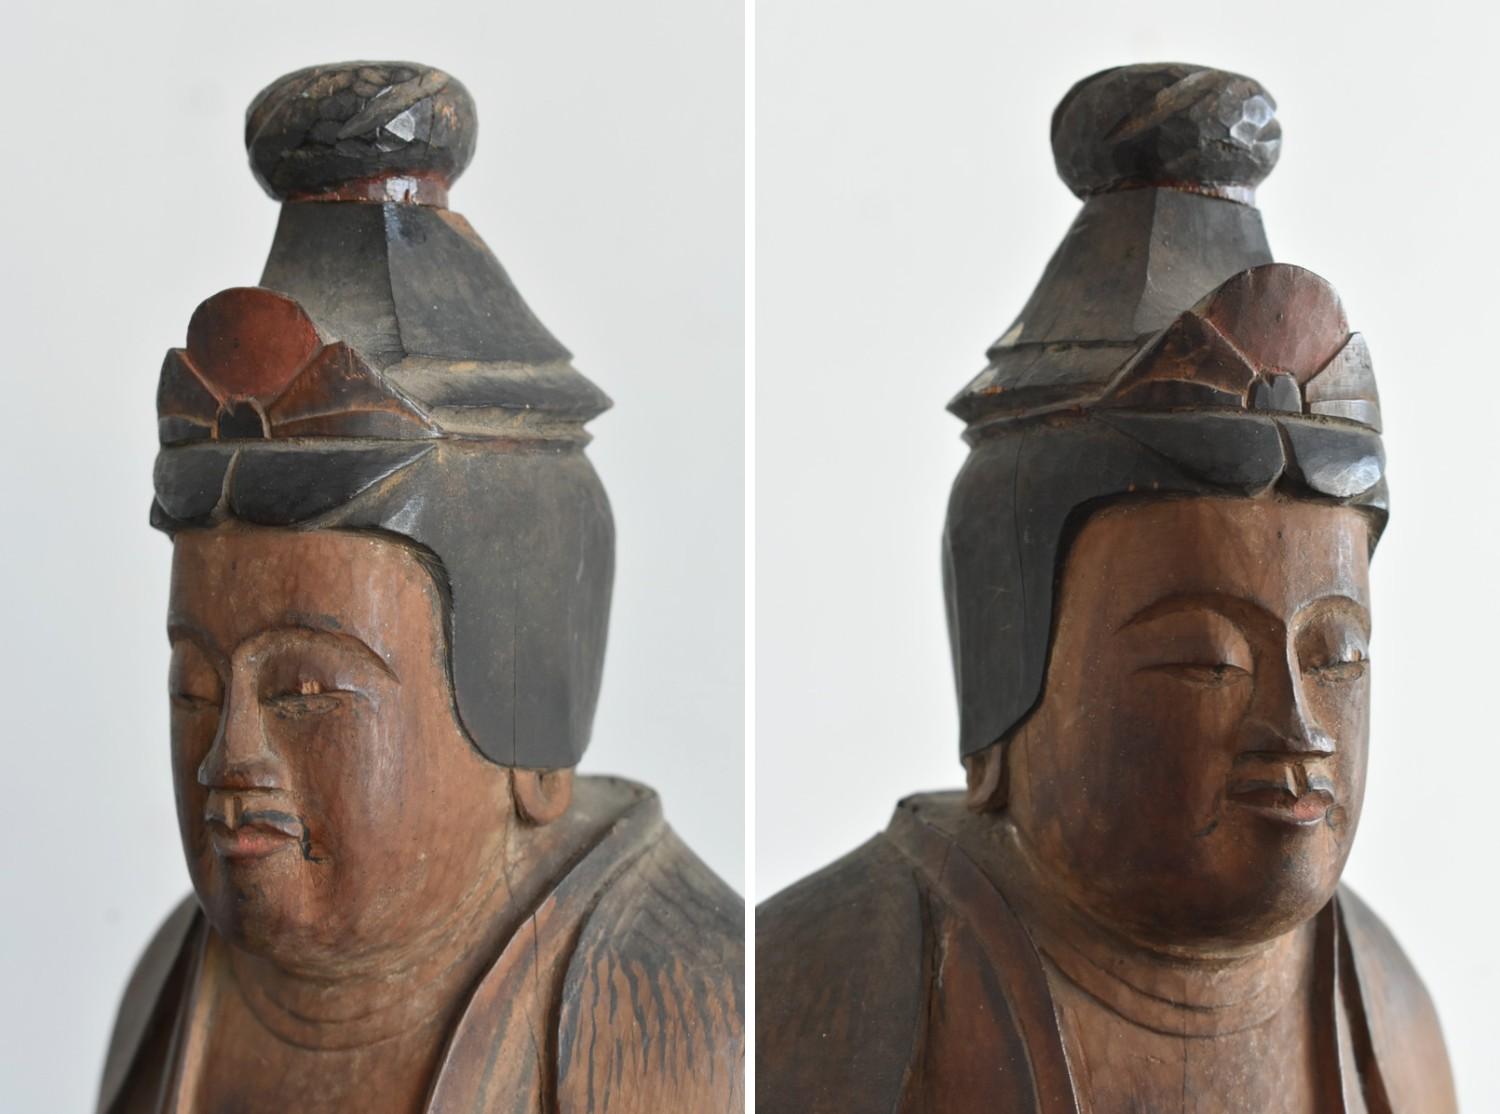 Japanese Made in 1599 Beautiful Wooden Buddha Statue / Bodhisattva / Edo Period